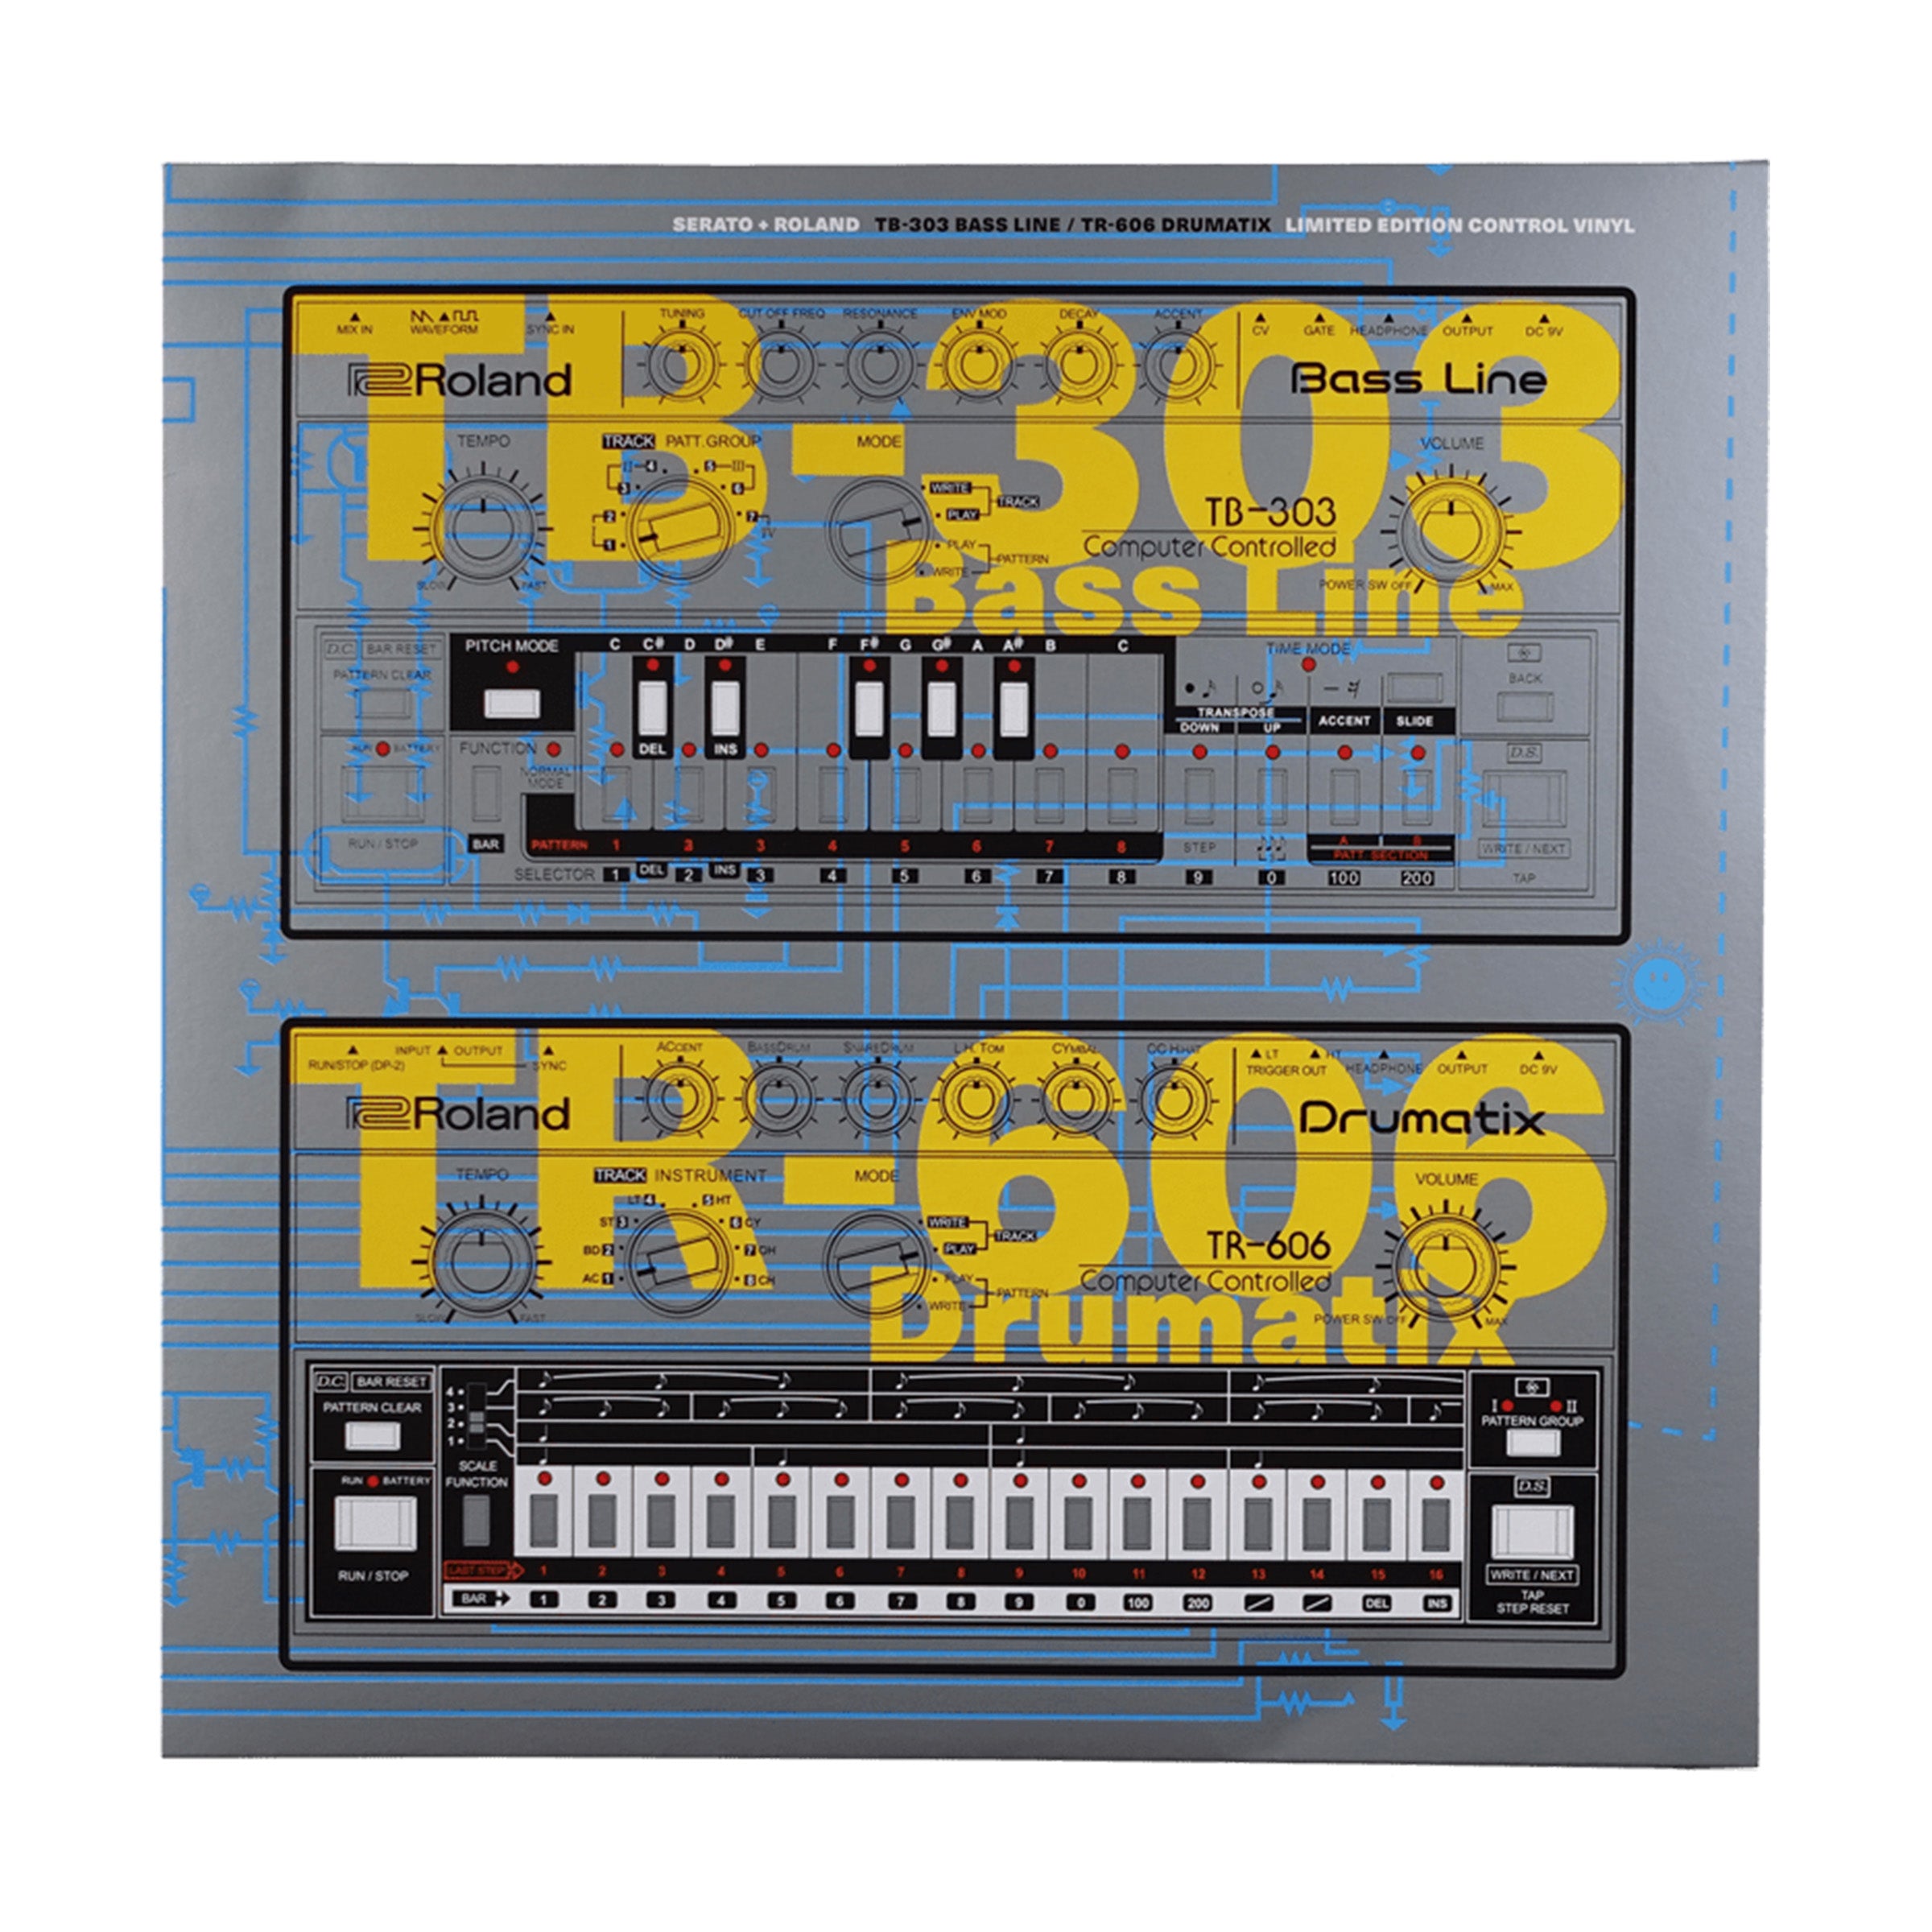 Serato x Roland TB-303 / TR-606 Drumatix Control Vinyl